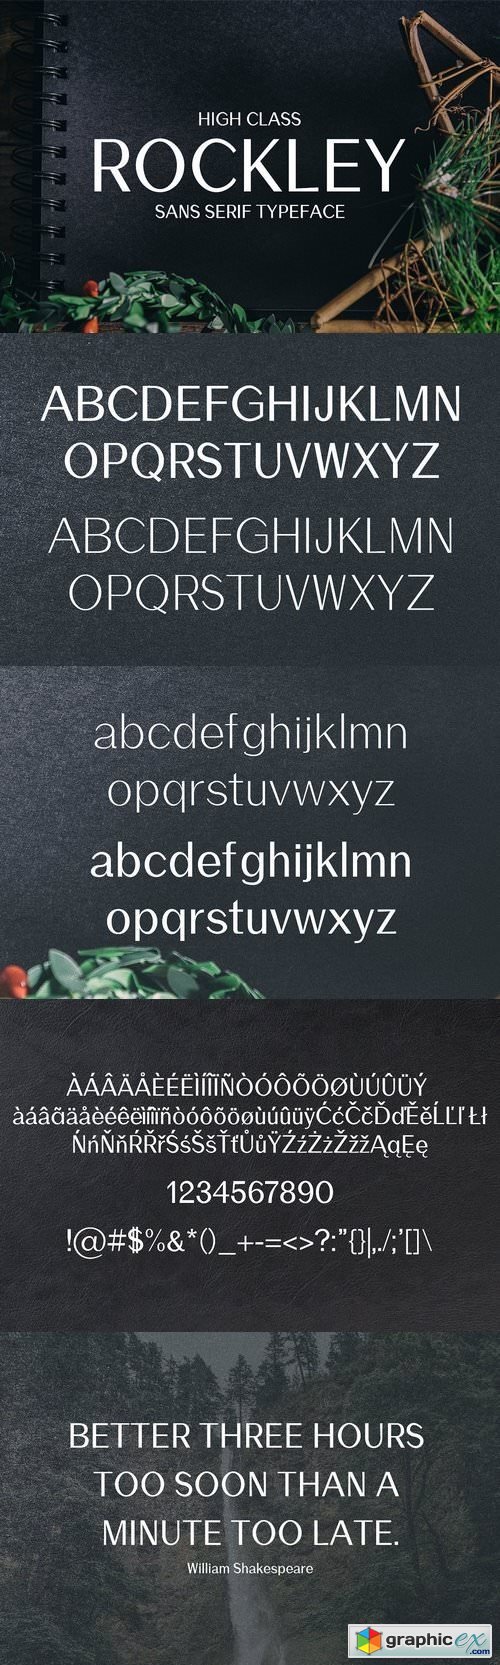 Rockley Sans Serif 5 Font Family